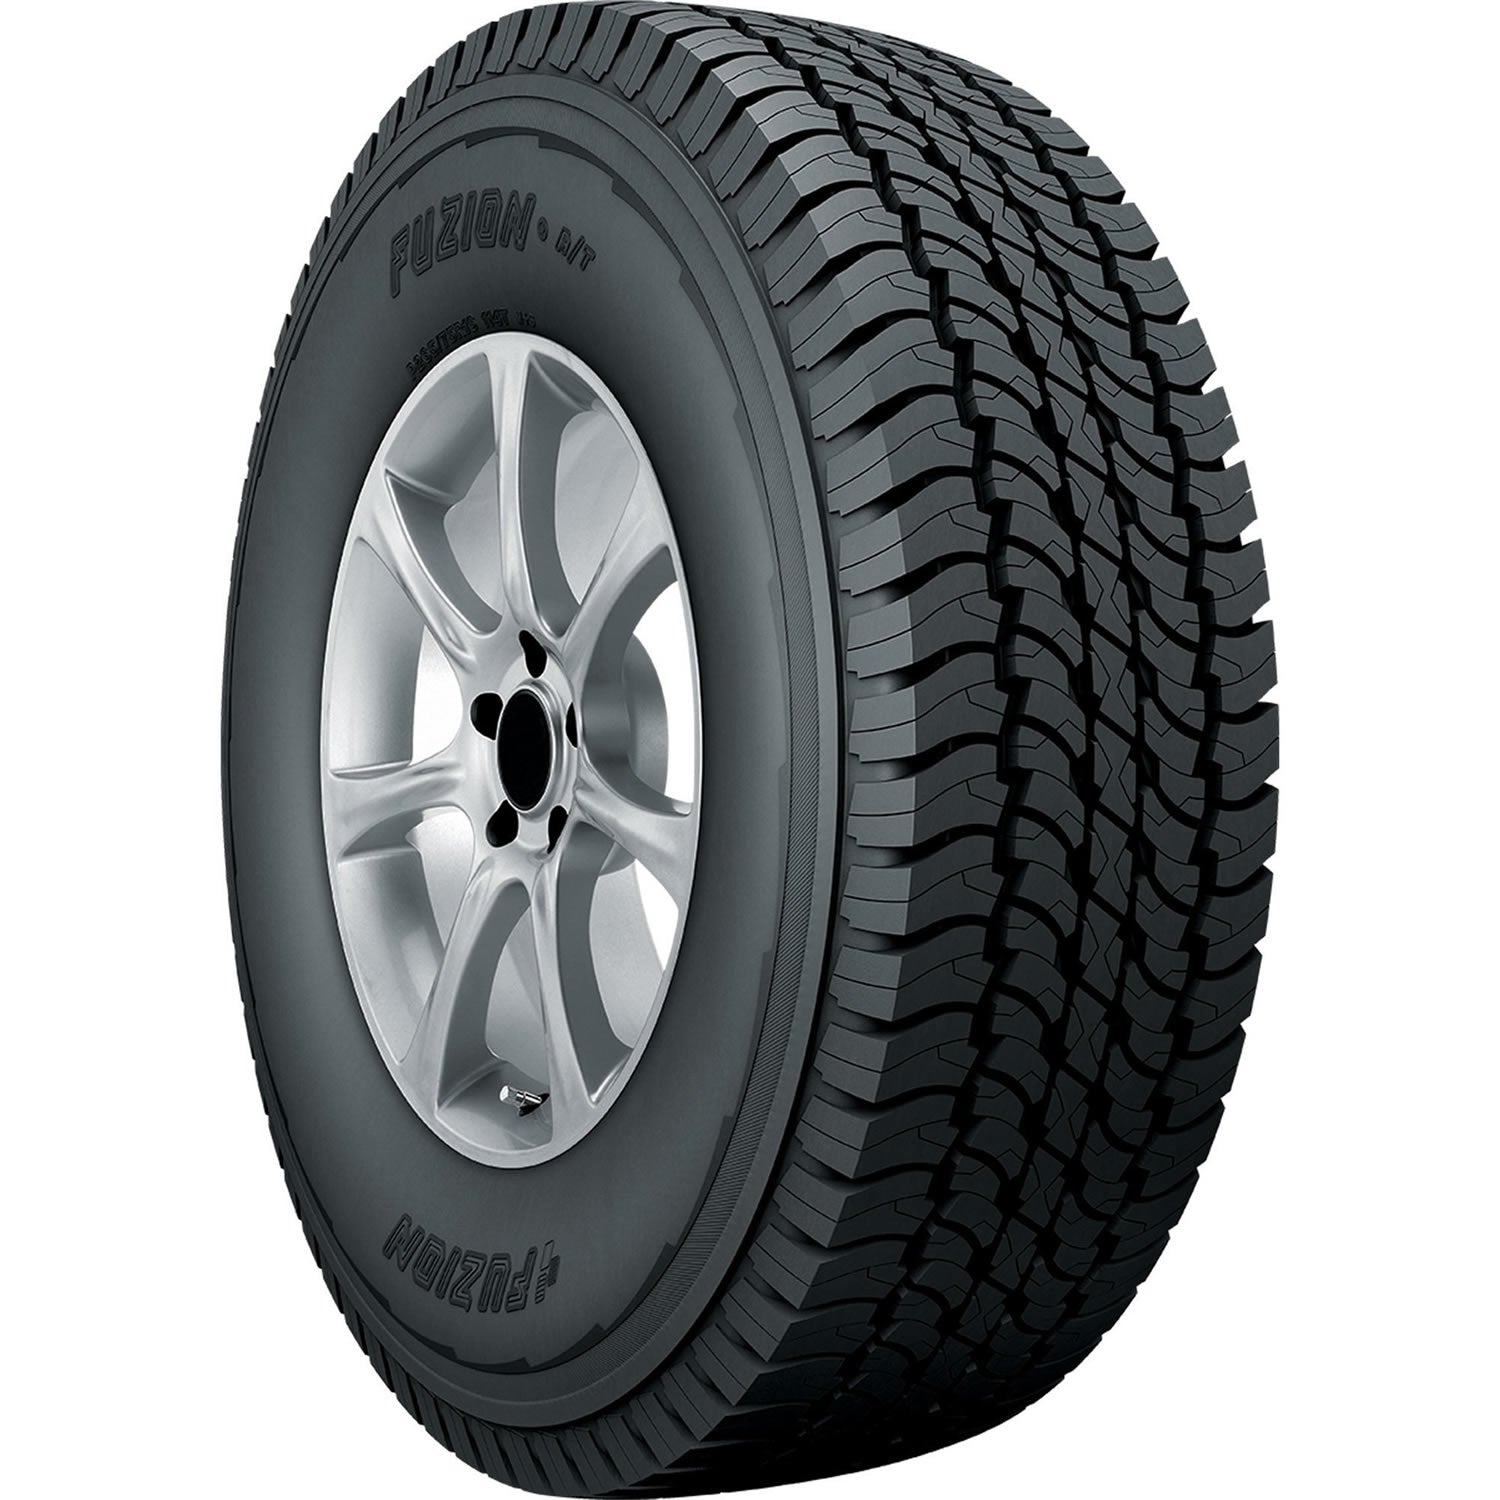 FUZION AT P265/70R16 (30.6X10.4R 16) Tires